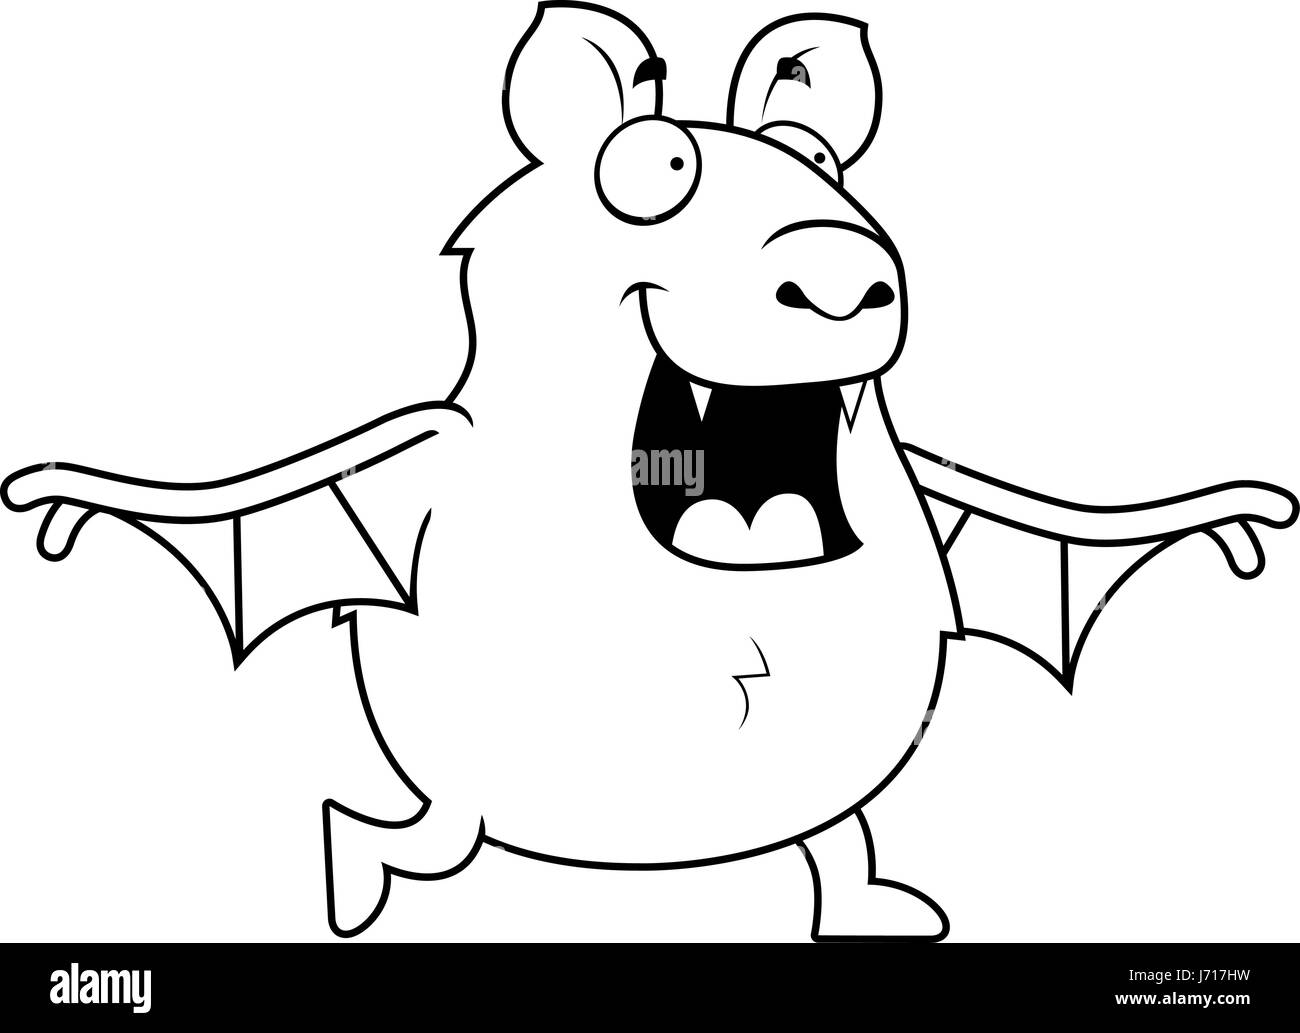 Cartoon bat Black and White Stock Photos & Images - Alamy